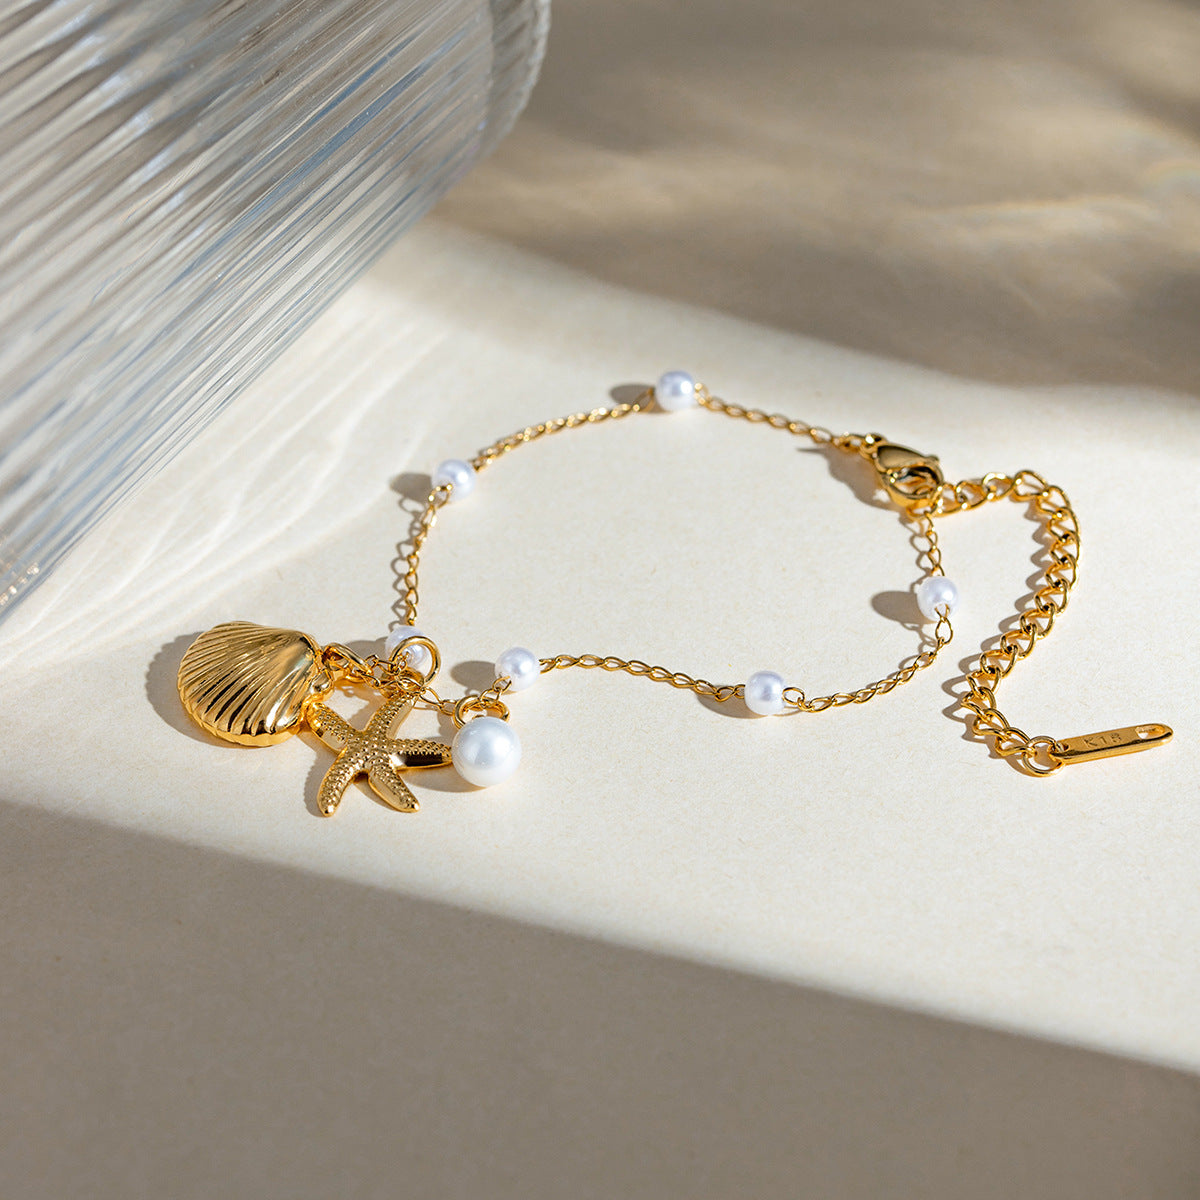 18K Gold Stainless Steel Pearl Chain Shell Starfish Pendant Bracelet